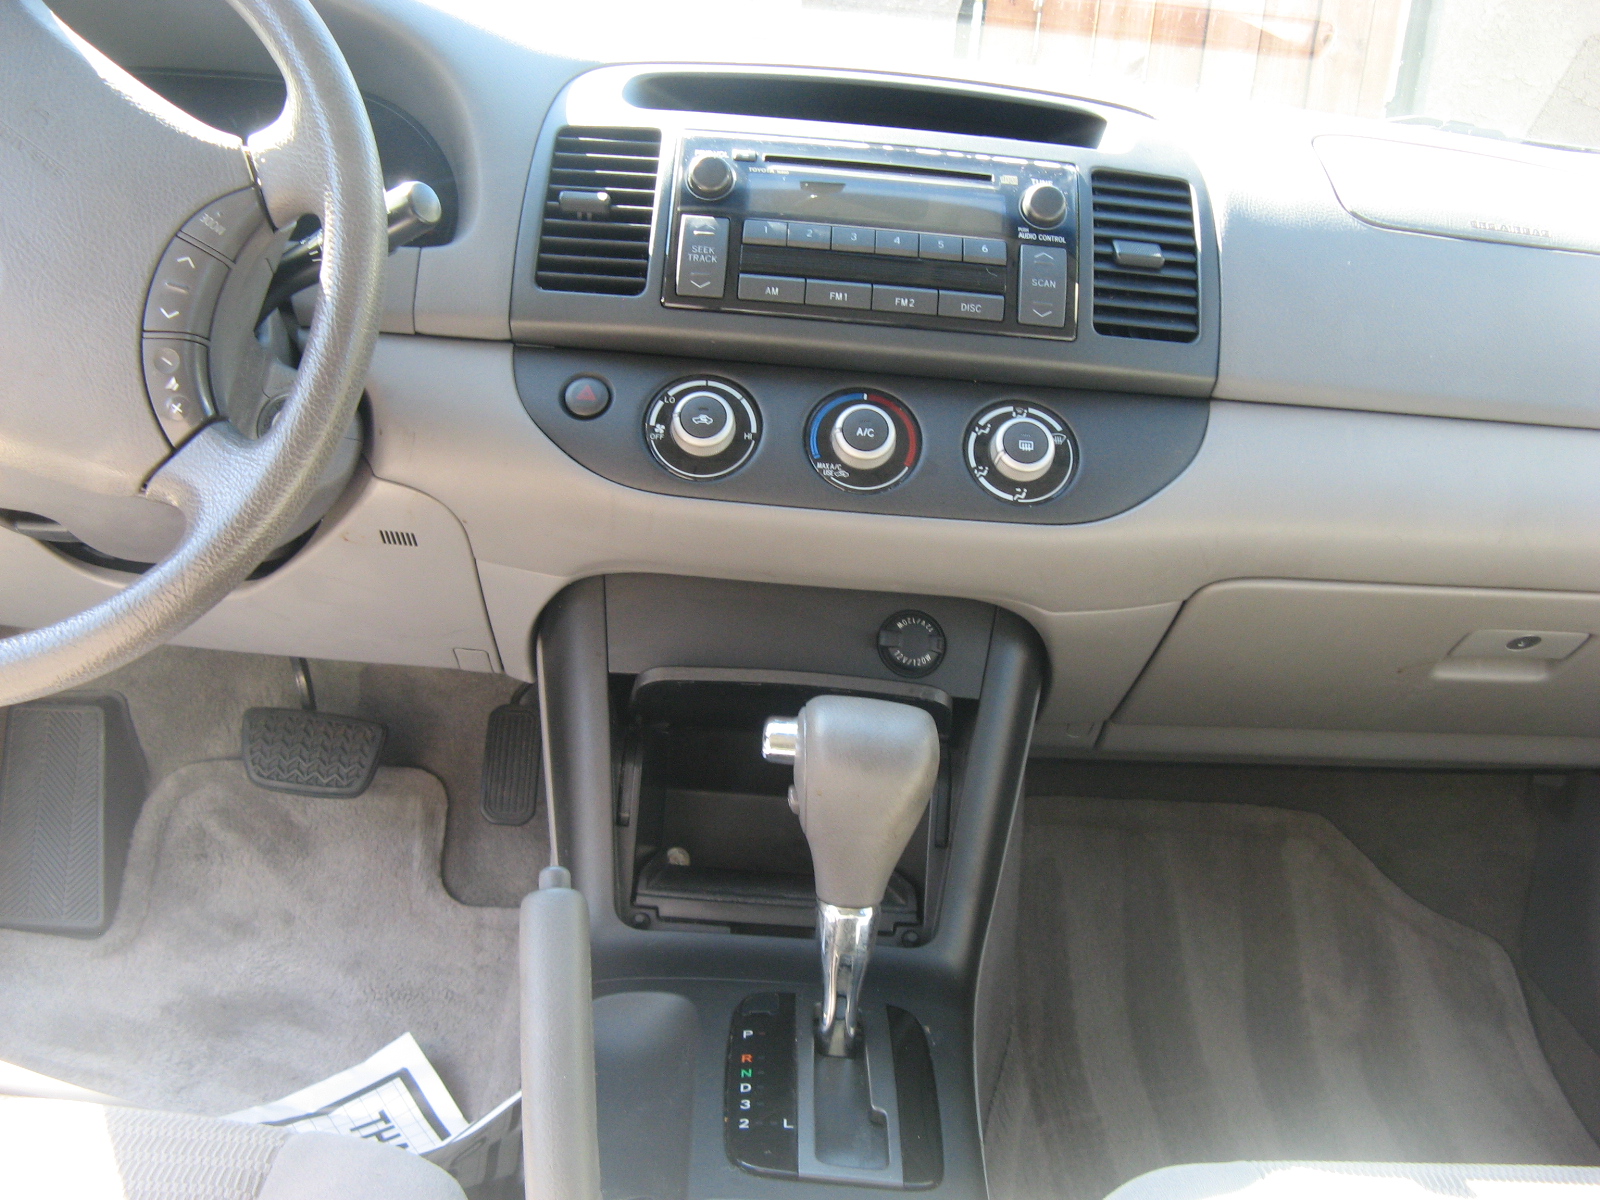 2006 toyota camry interior #4